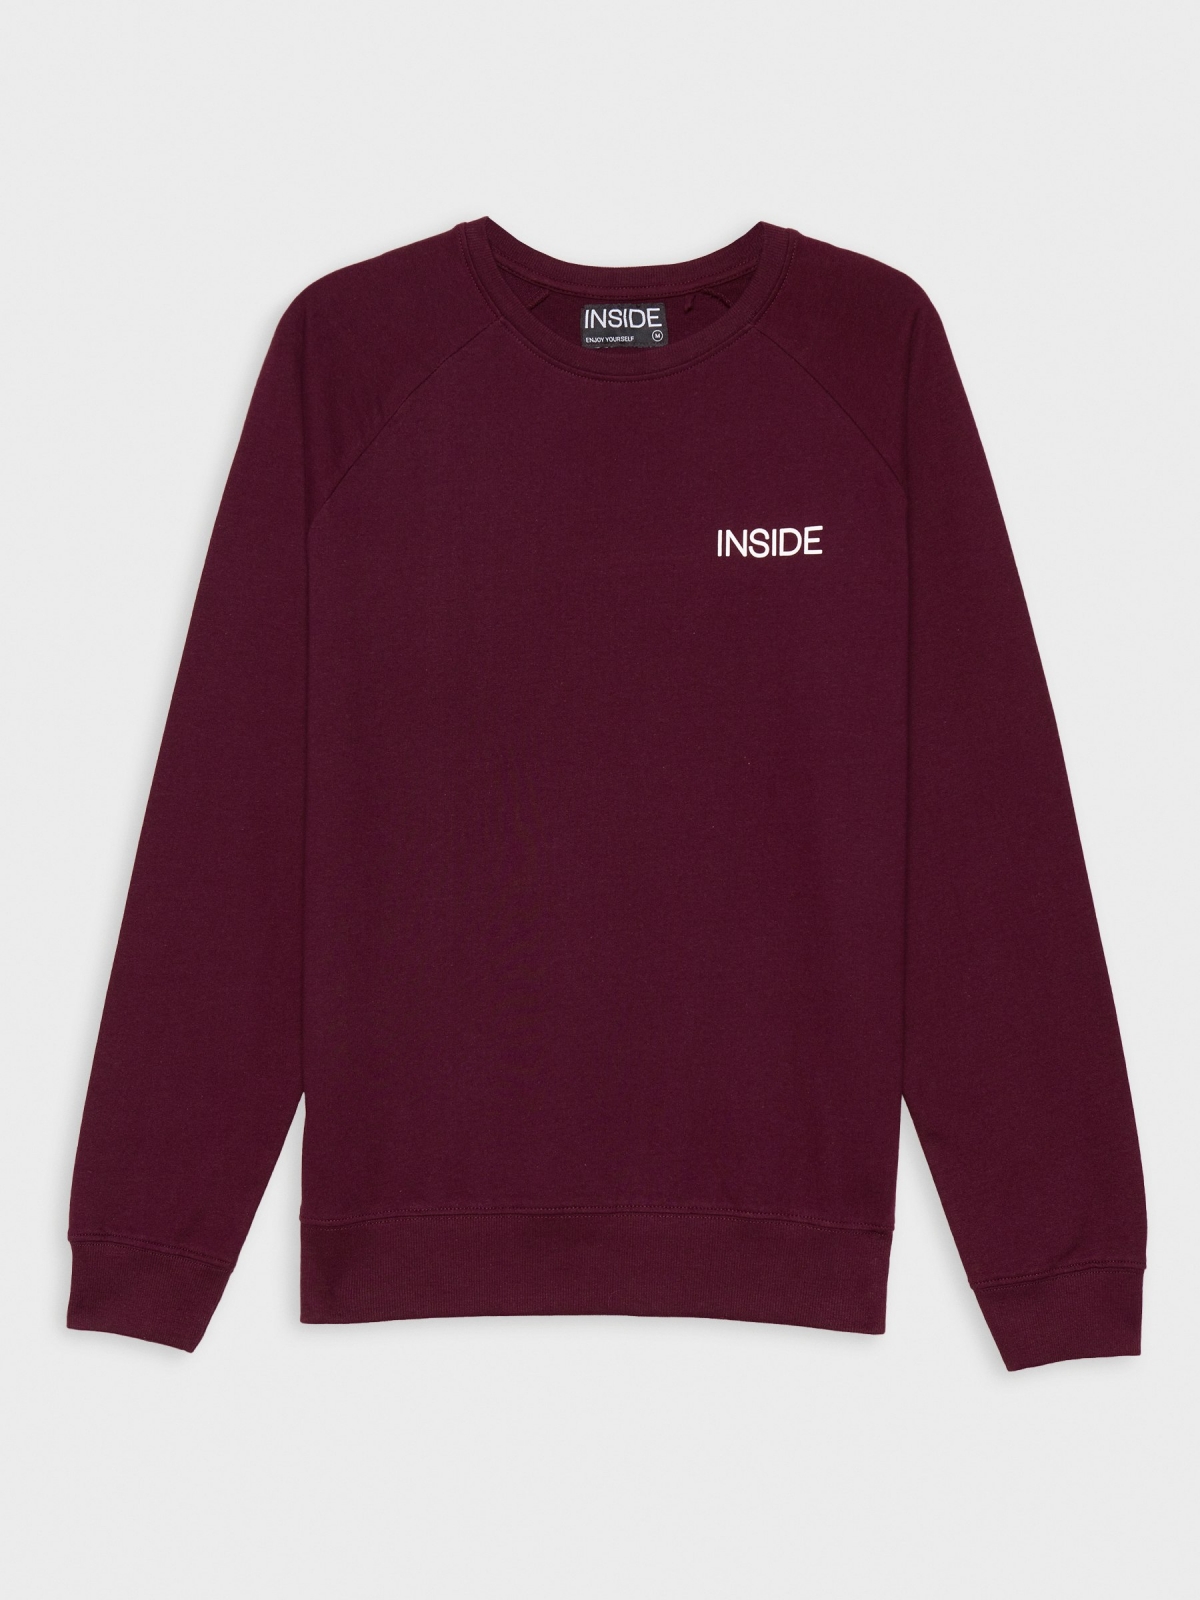  Basic sweatshirt with text garnet